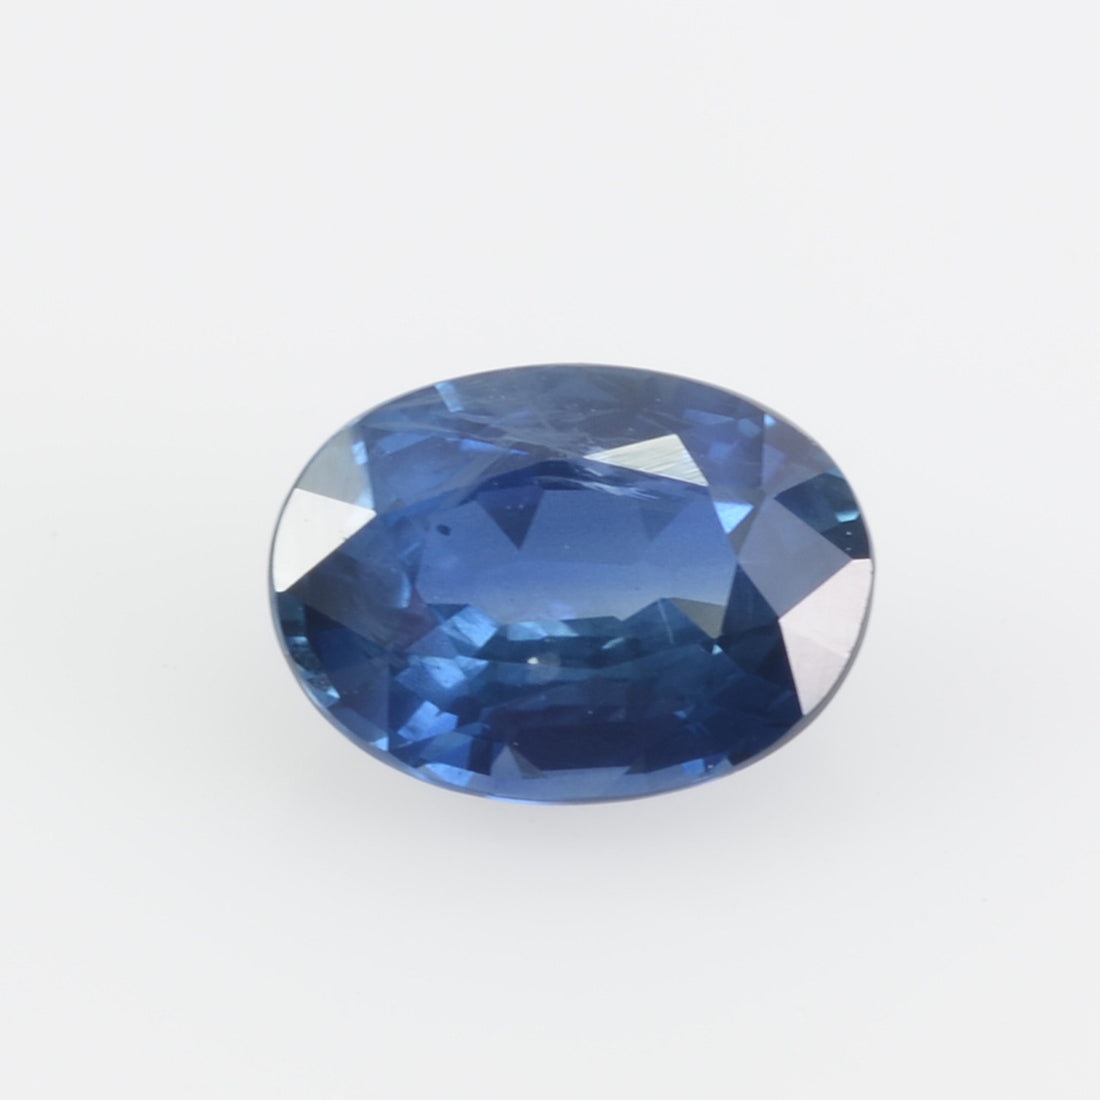 0.83 Cts Natural Blue Sapphire Loose Gemstone Oval Cut - Thai Gems Export Ltd.